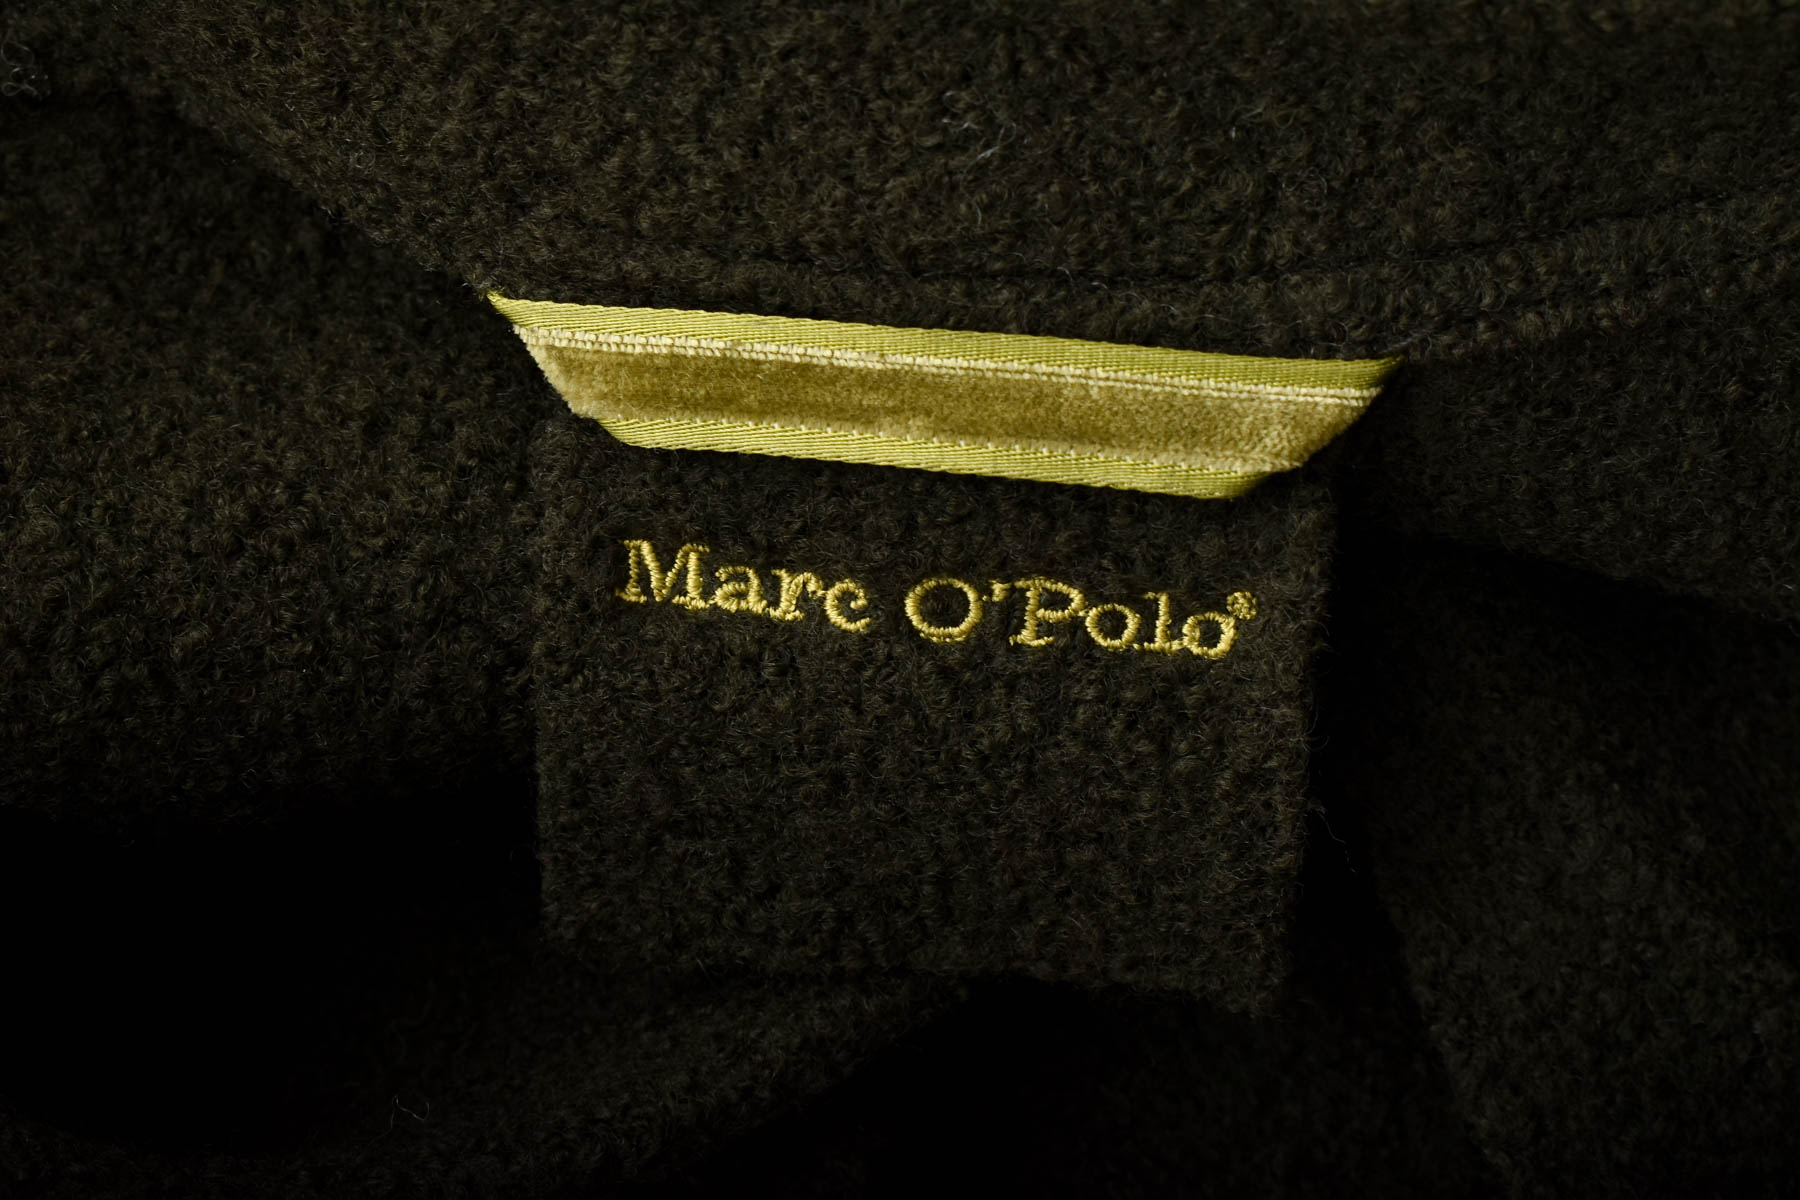 Women's cardigan - Marc O' Polo - 2